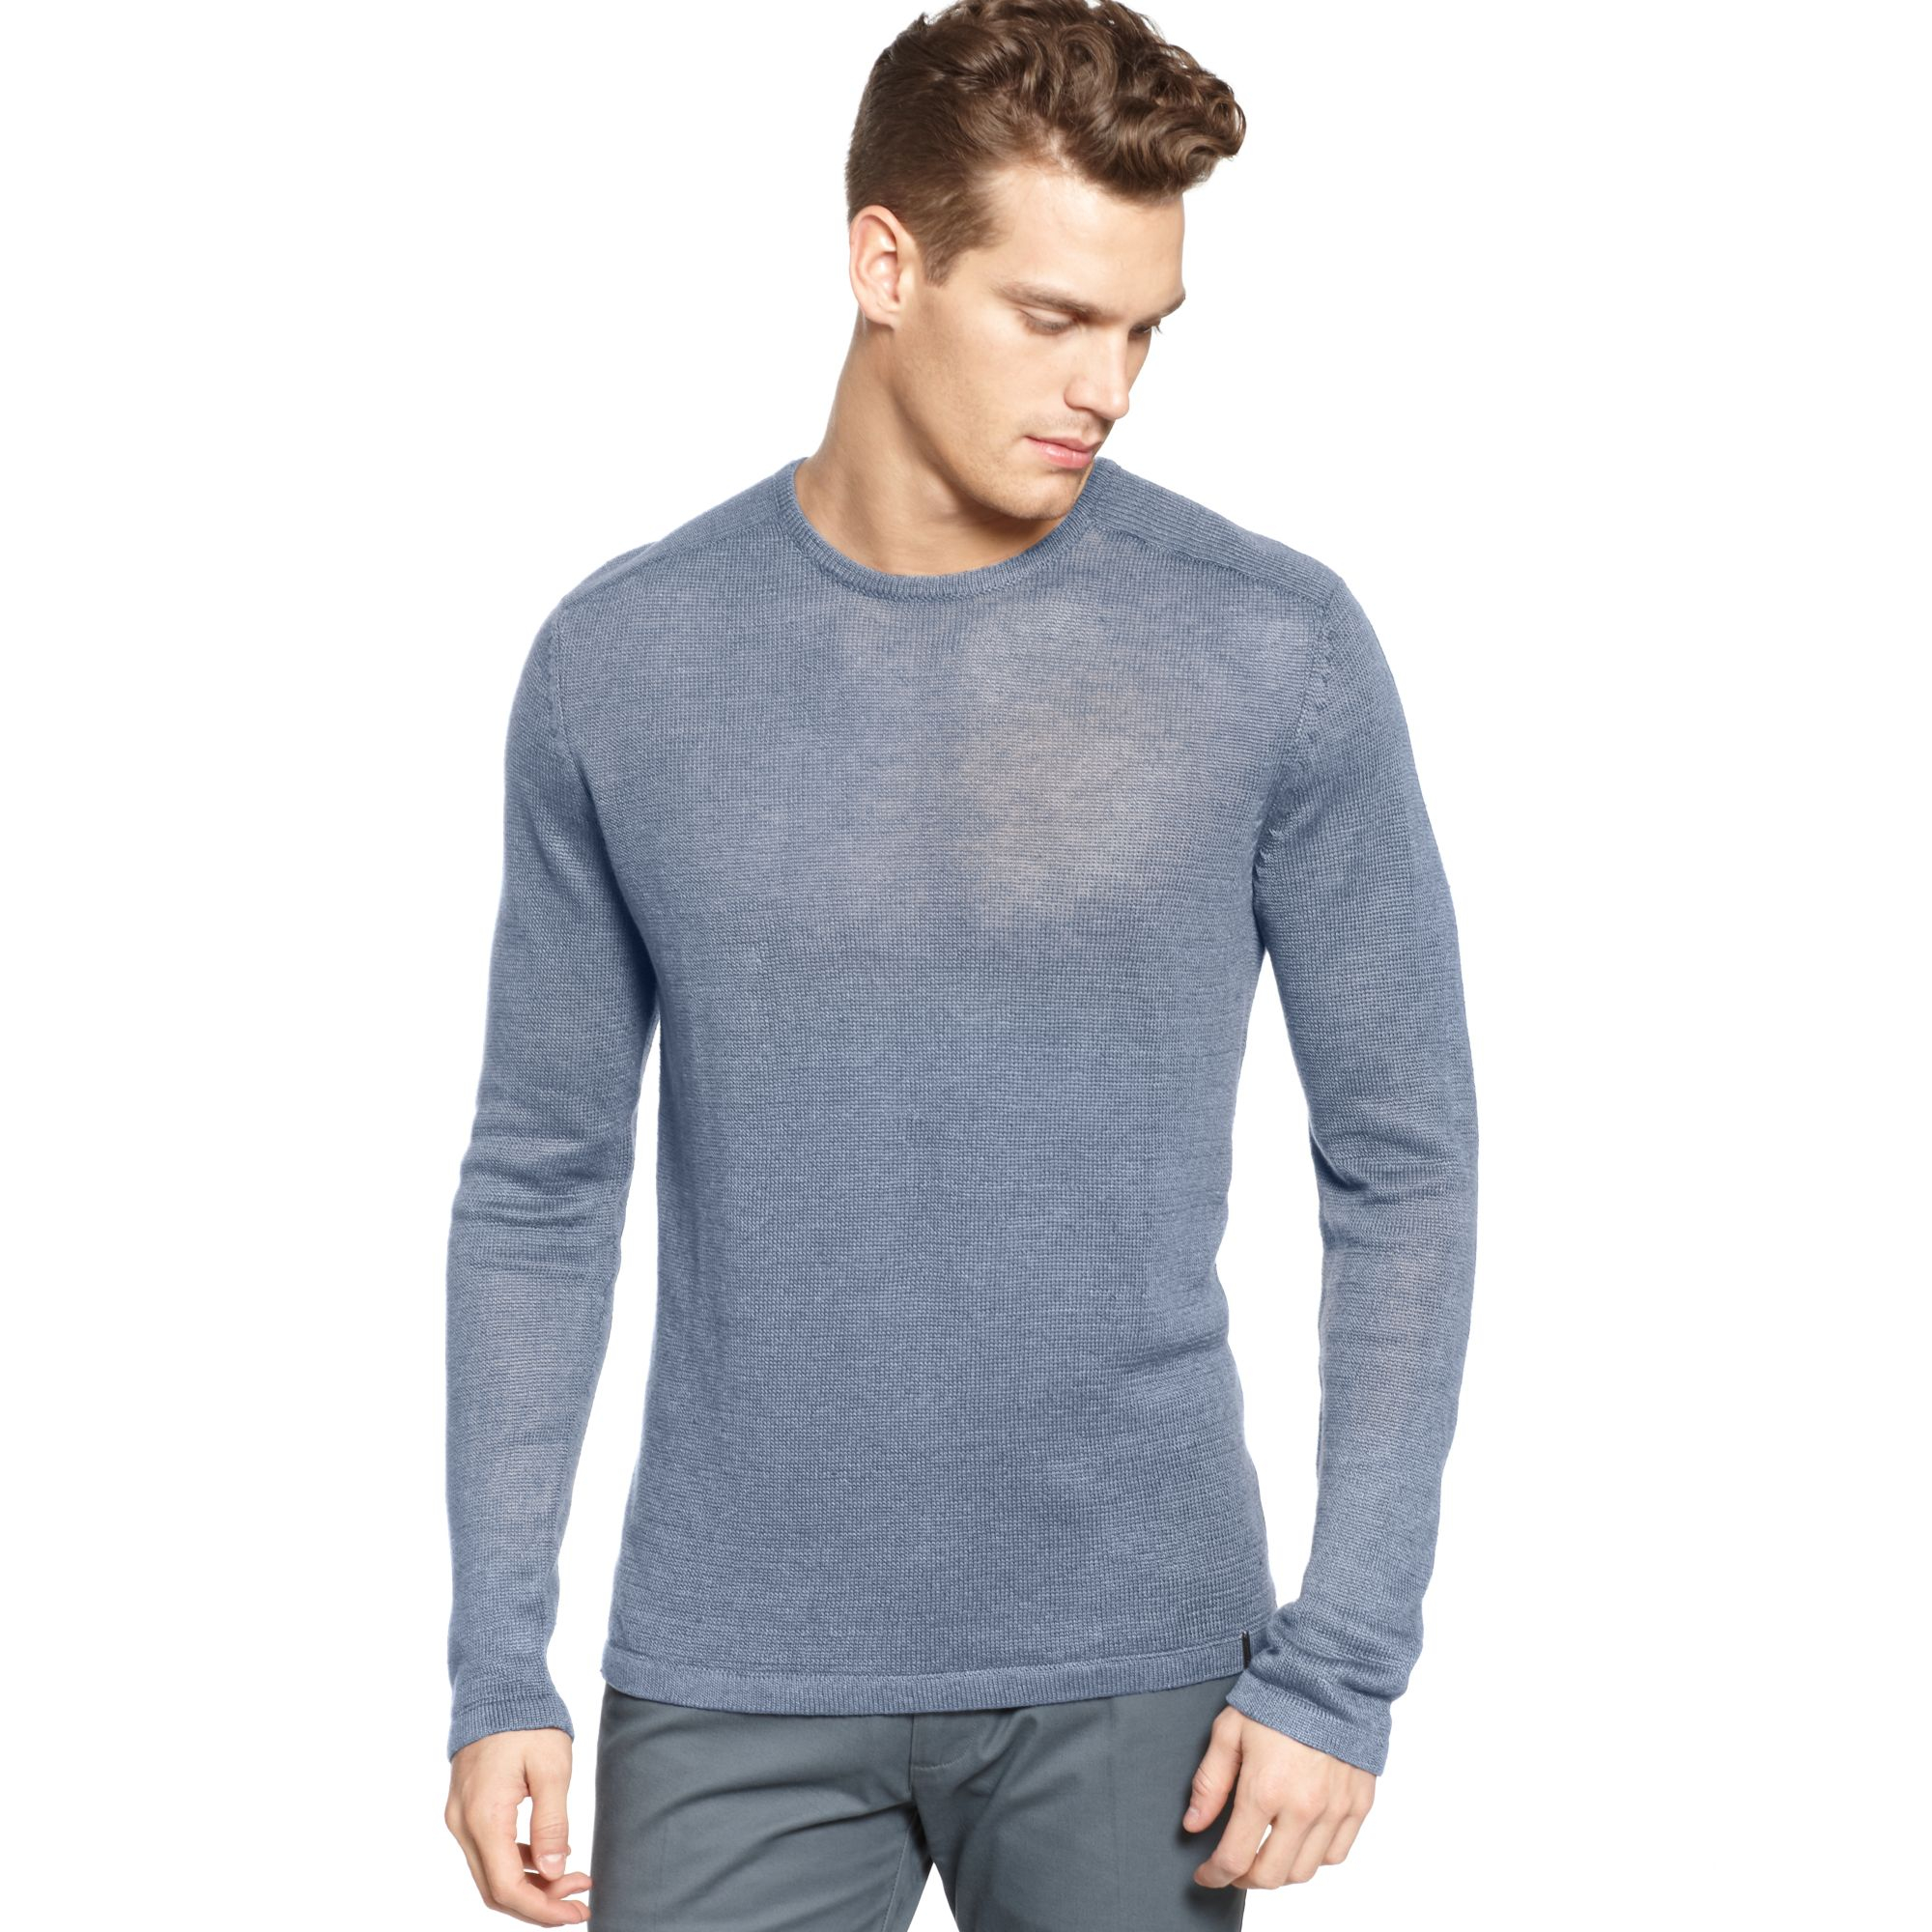 Lyst - Calvin Klein Crew Neck Linen Knit Shirt in Blue for Men